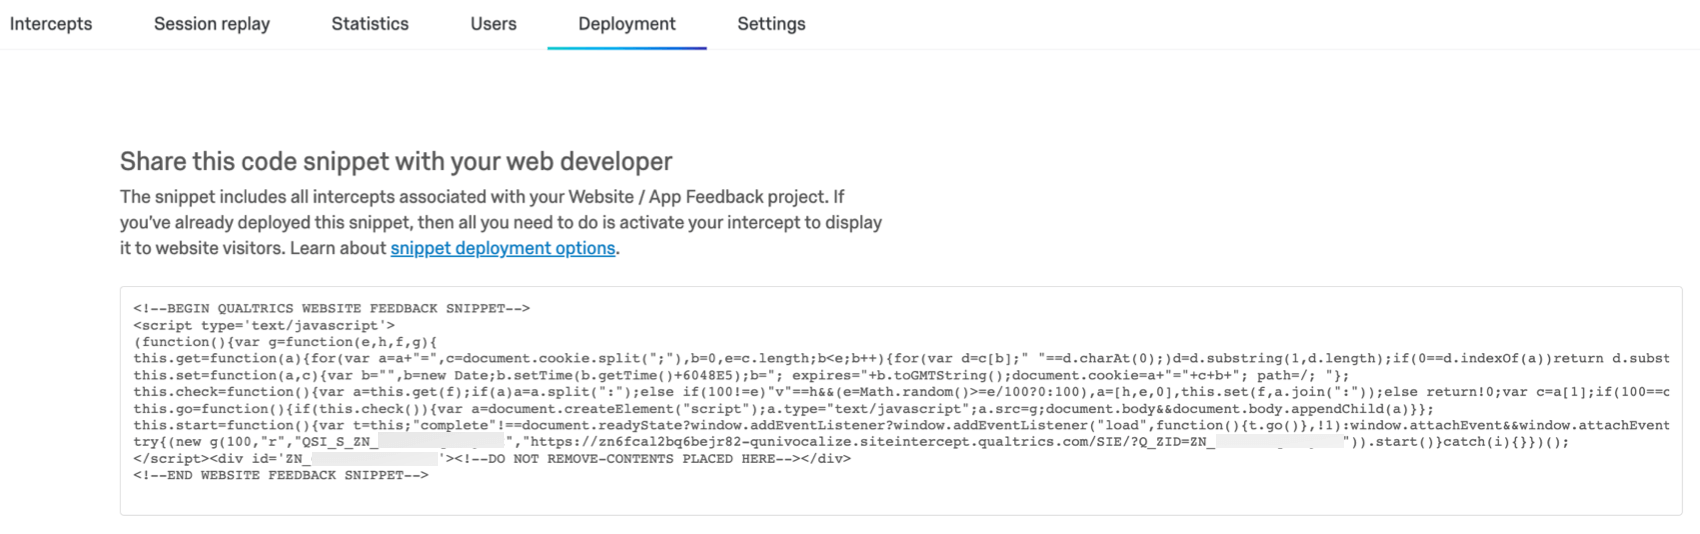 Feedback on my Loading screen - Creations Feedback - Developer Forum